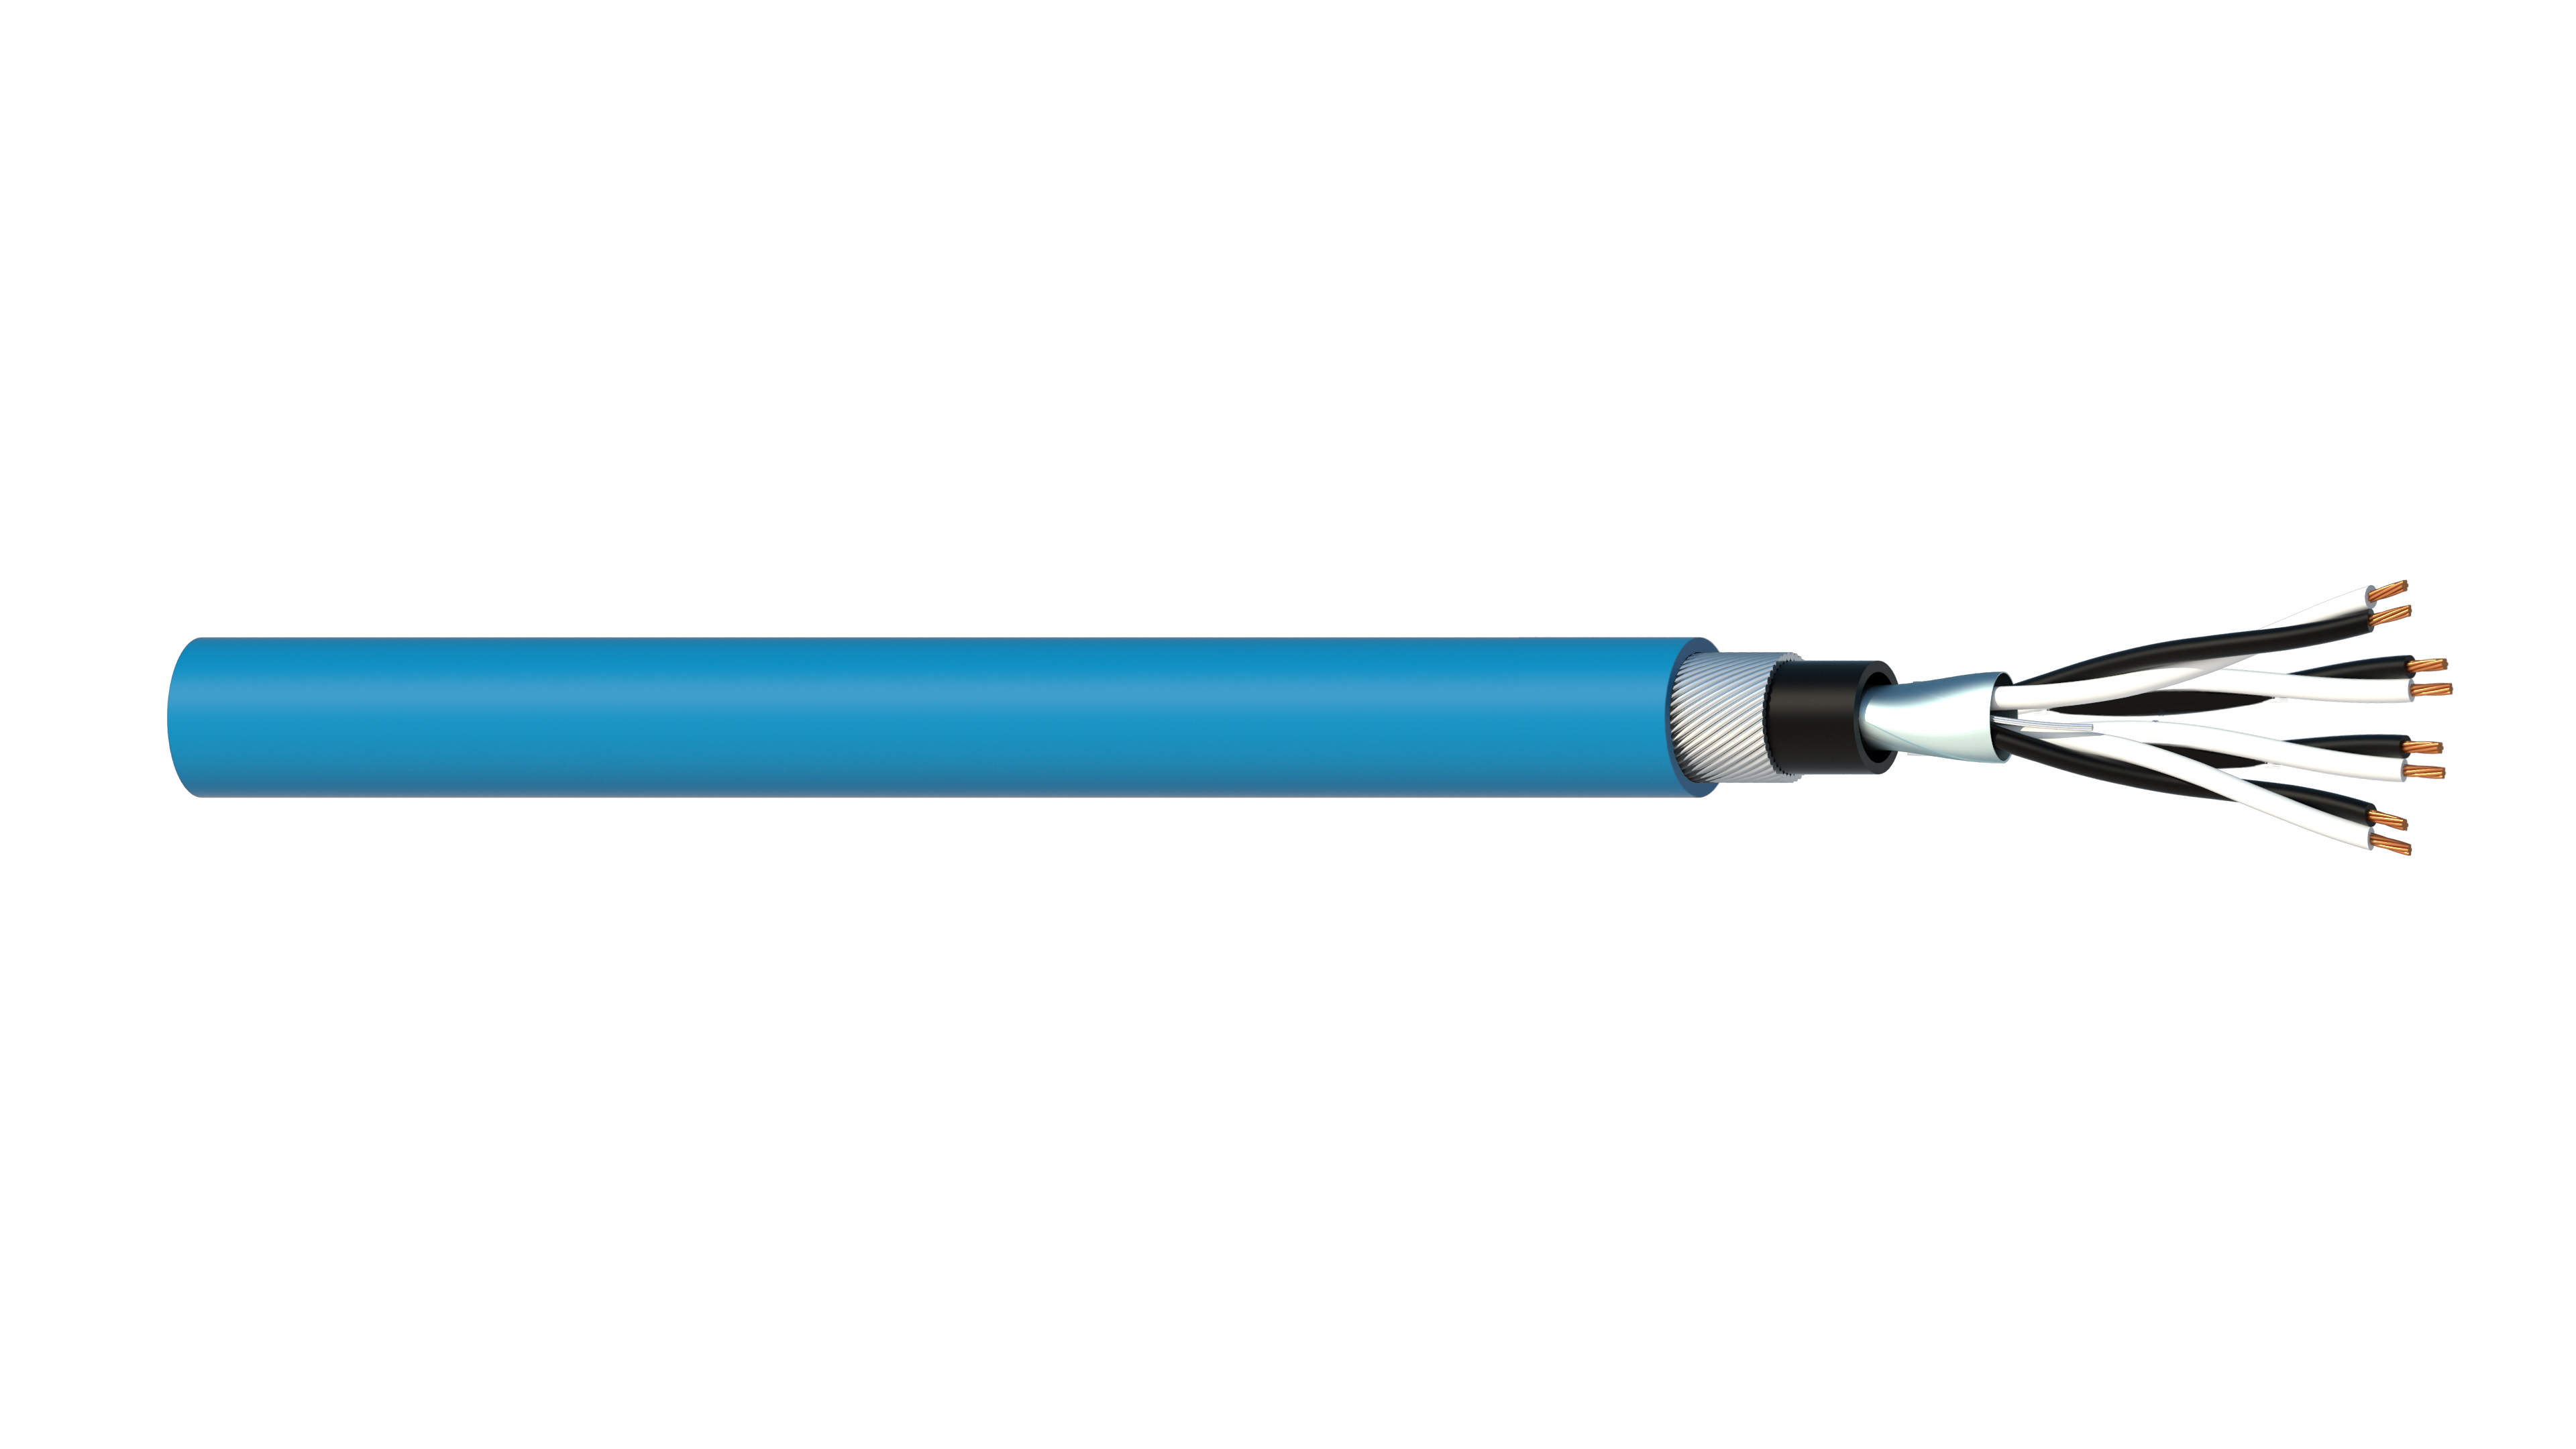 4 Pair 0.5mm2 Cu/PVC/OS/PVC/SWA/PVC Maser Instrumentation Cable - Blue Sheath